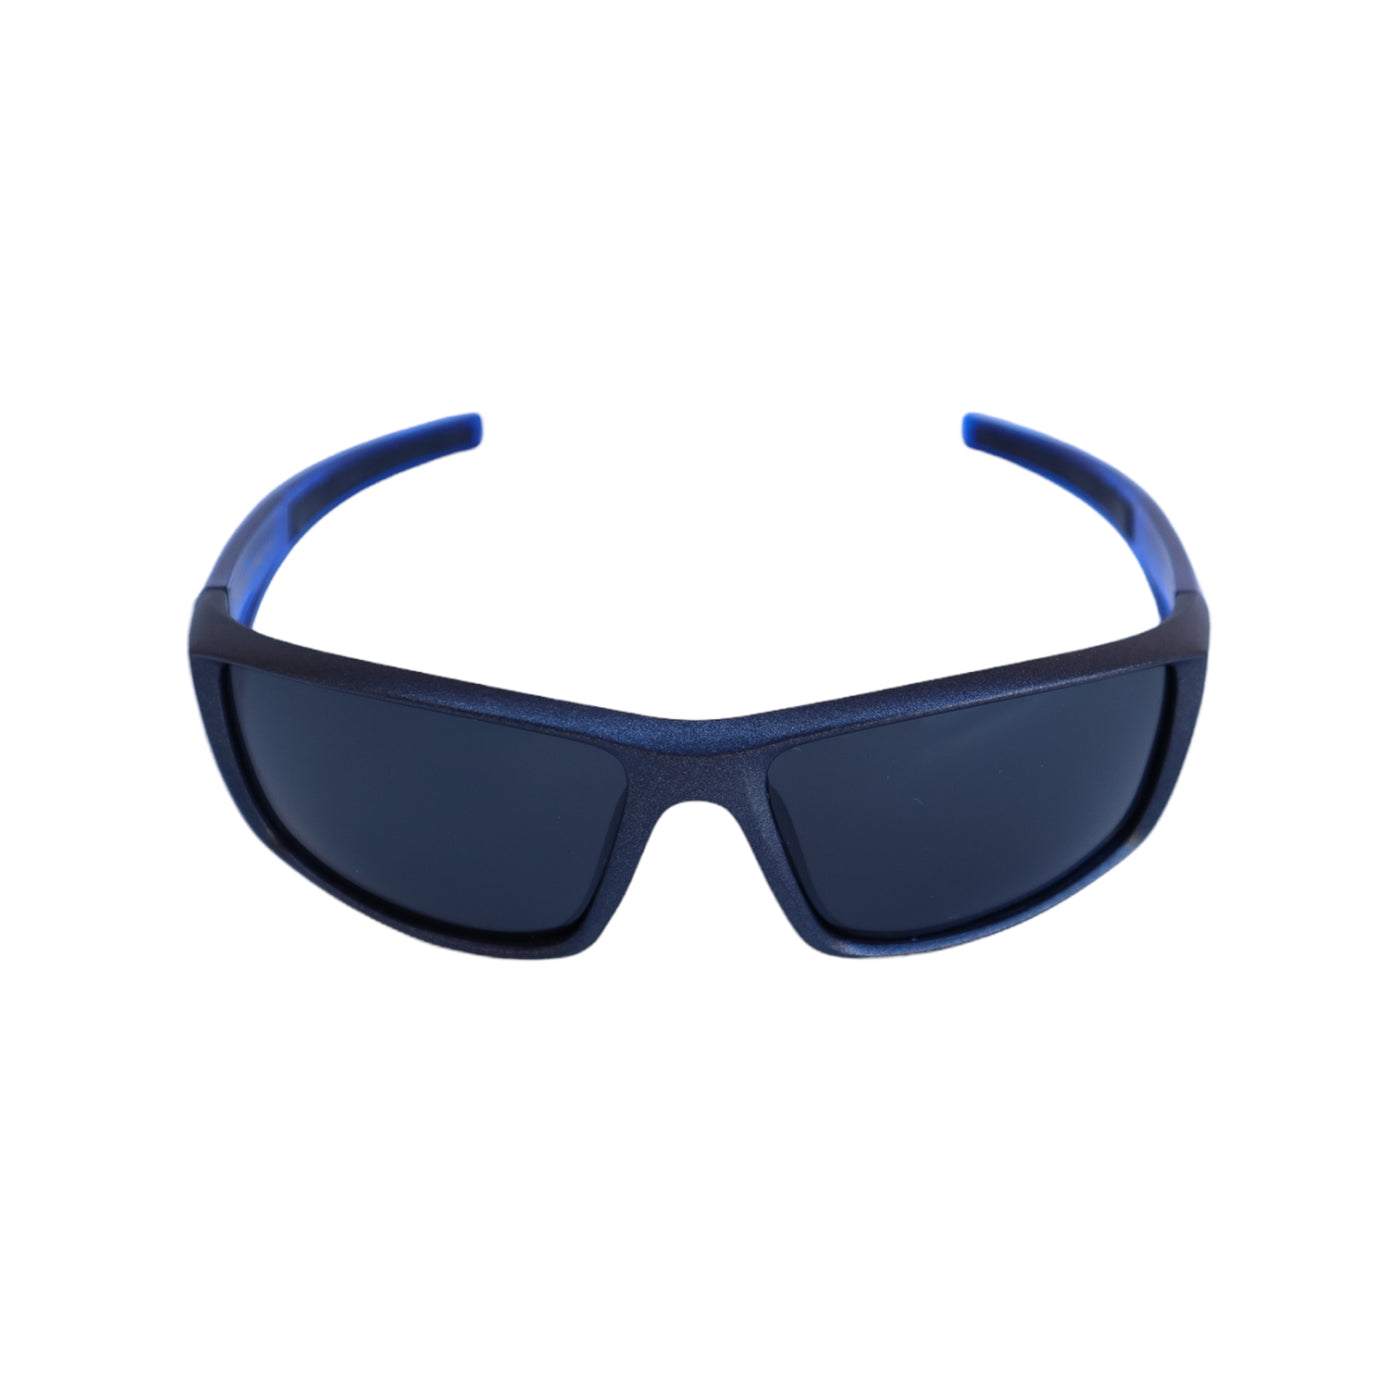 POLARIZED XLOOP Translucent BLUE Frame Drop Resistant Sunglasses Polarized Lens